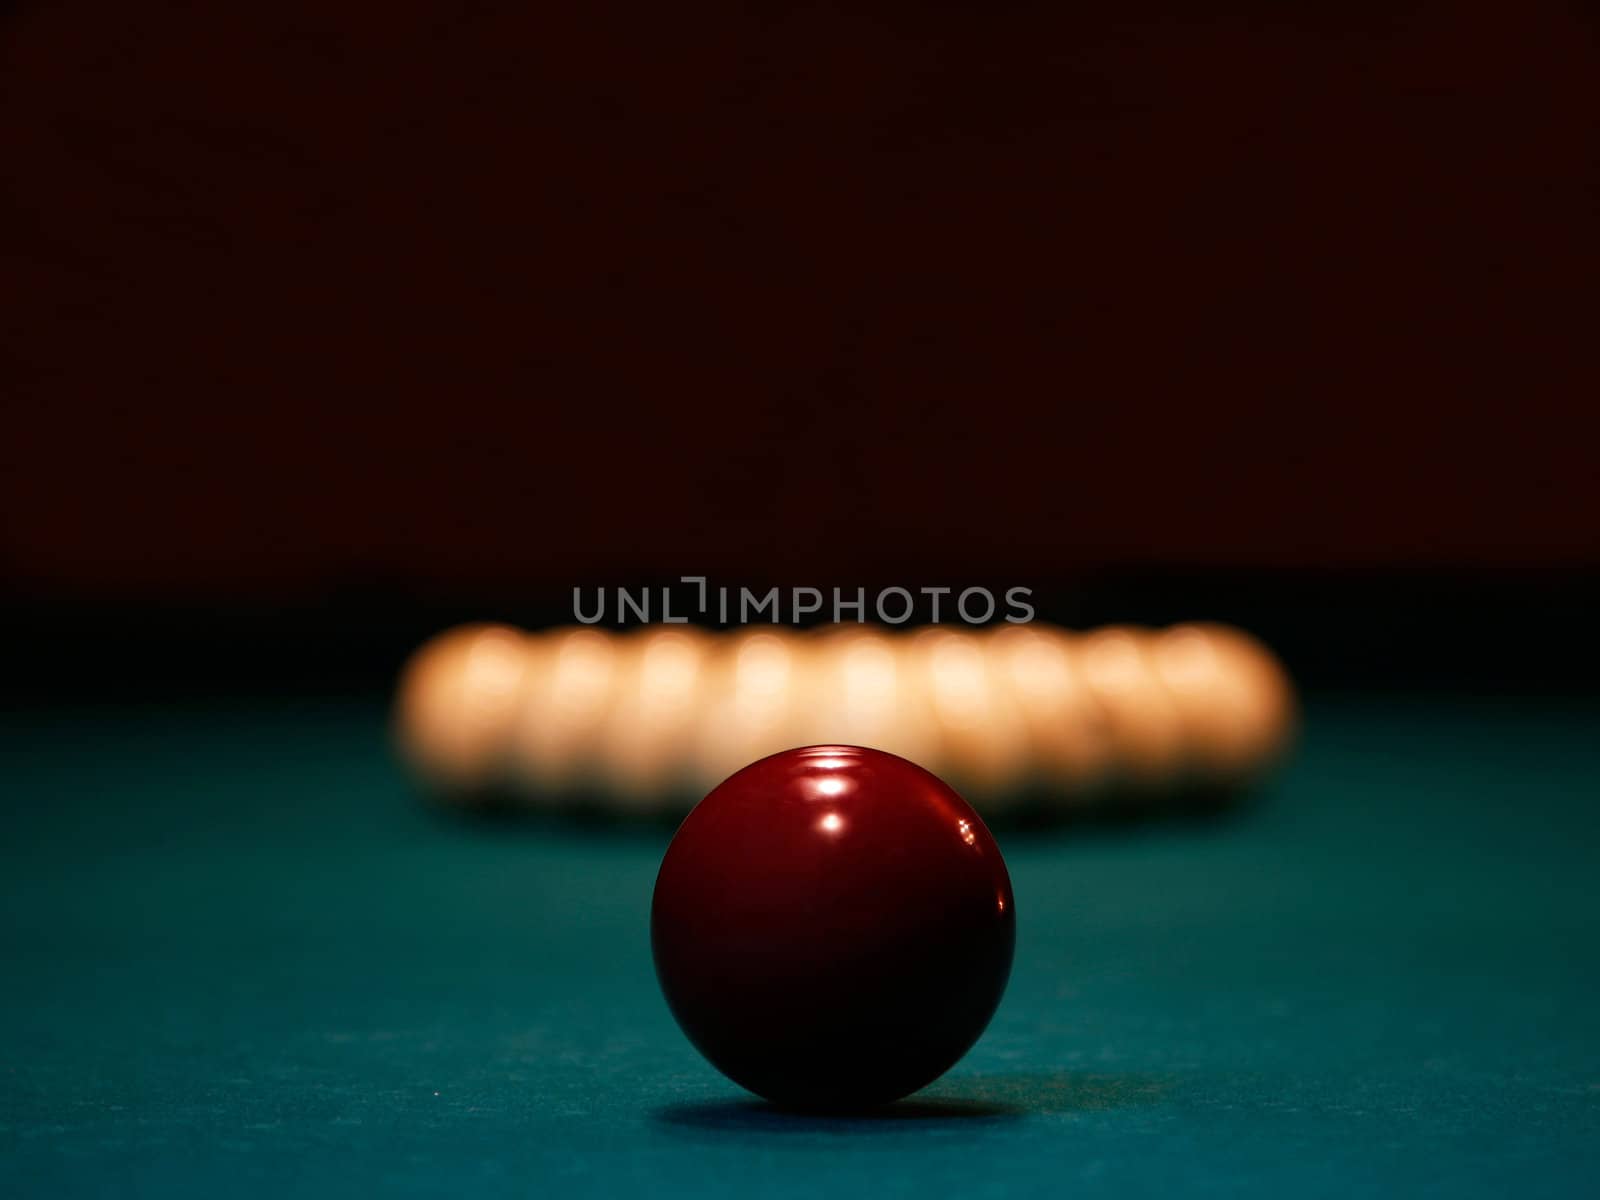 Pool balls by DeusNoxious